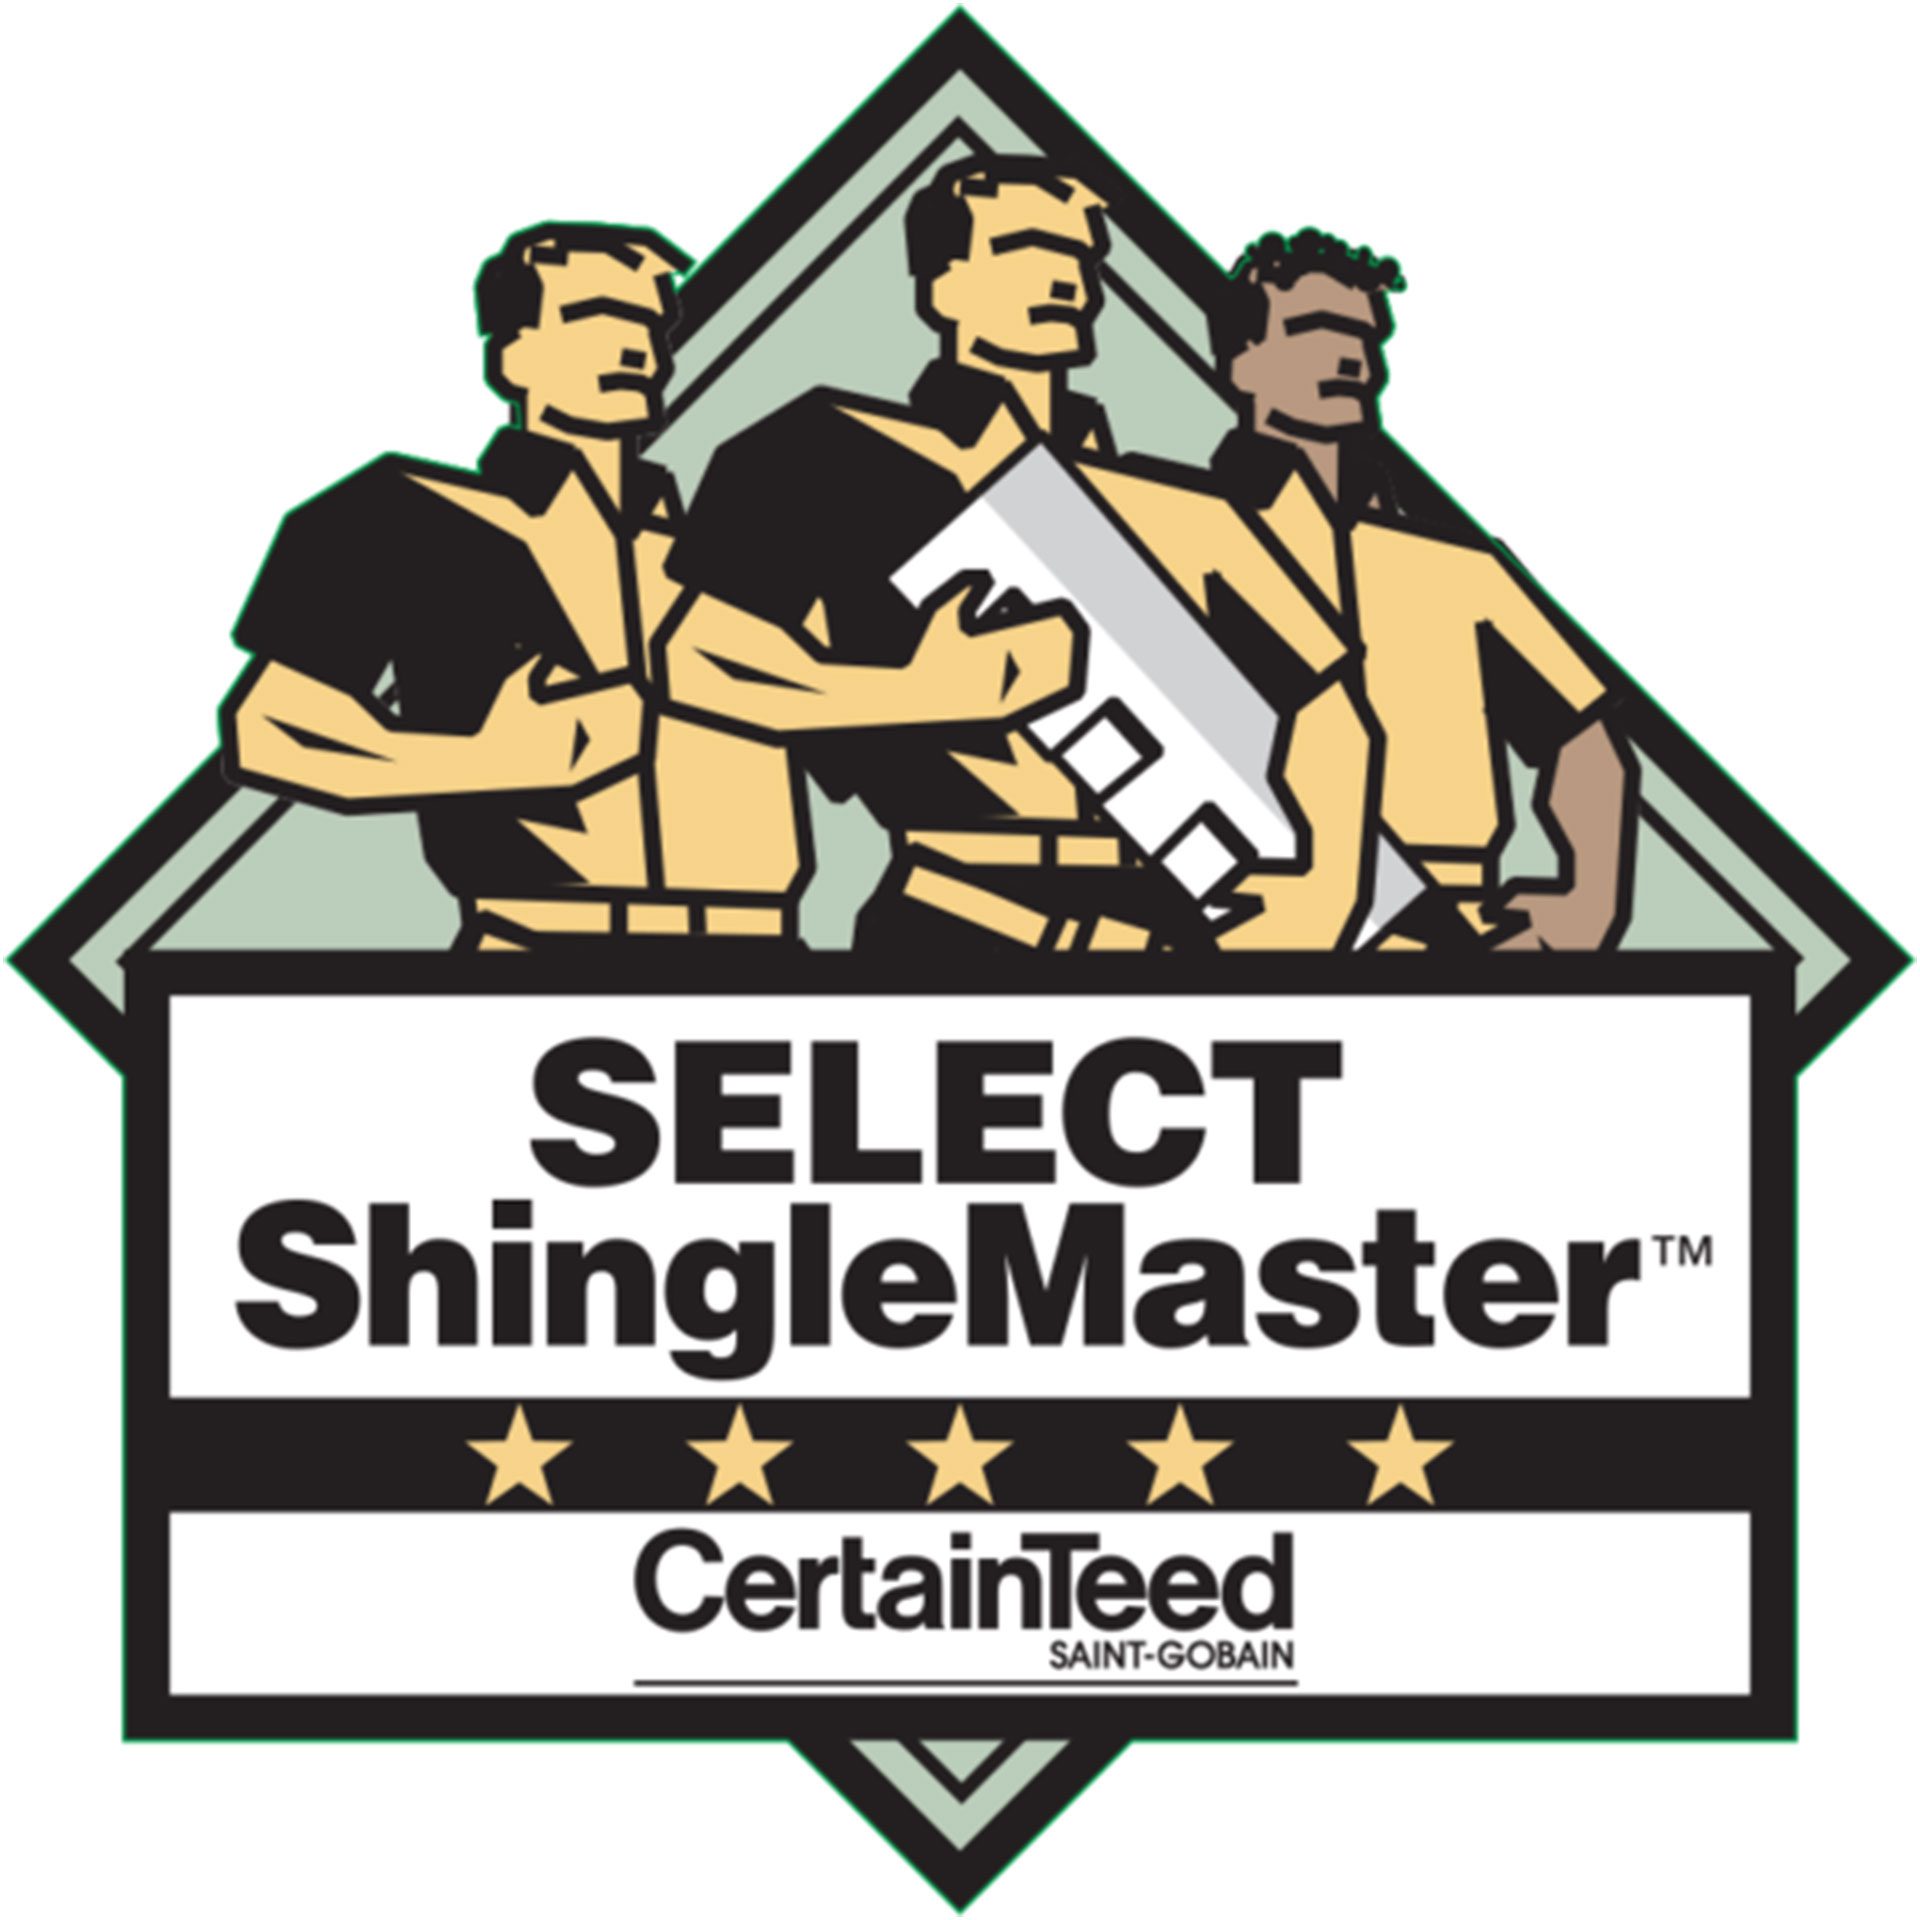 certainteed-select-shinglemaster-logo-600x600